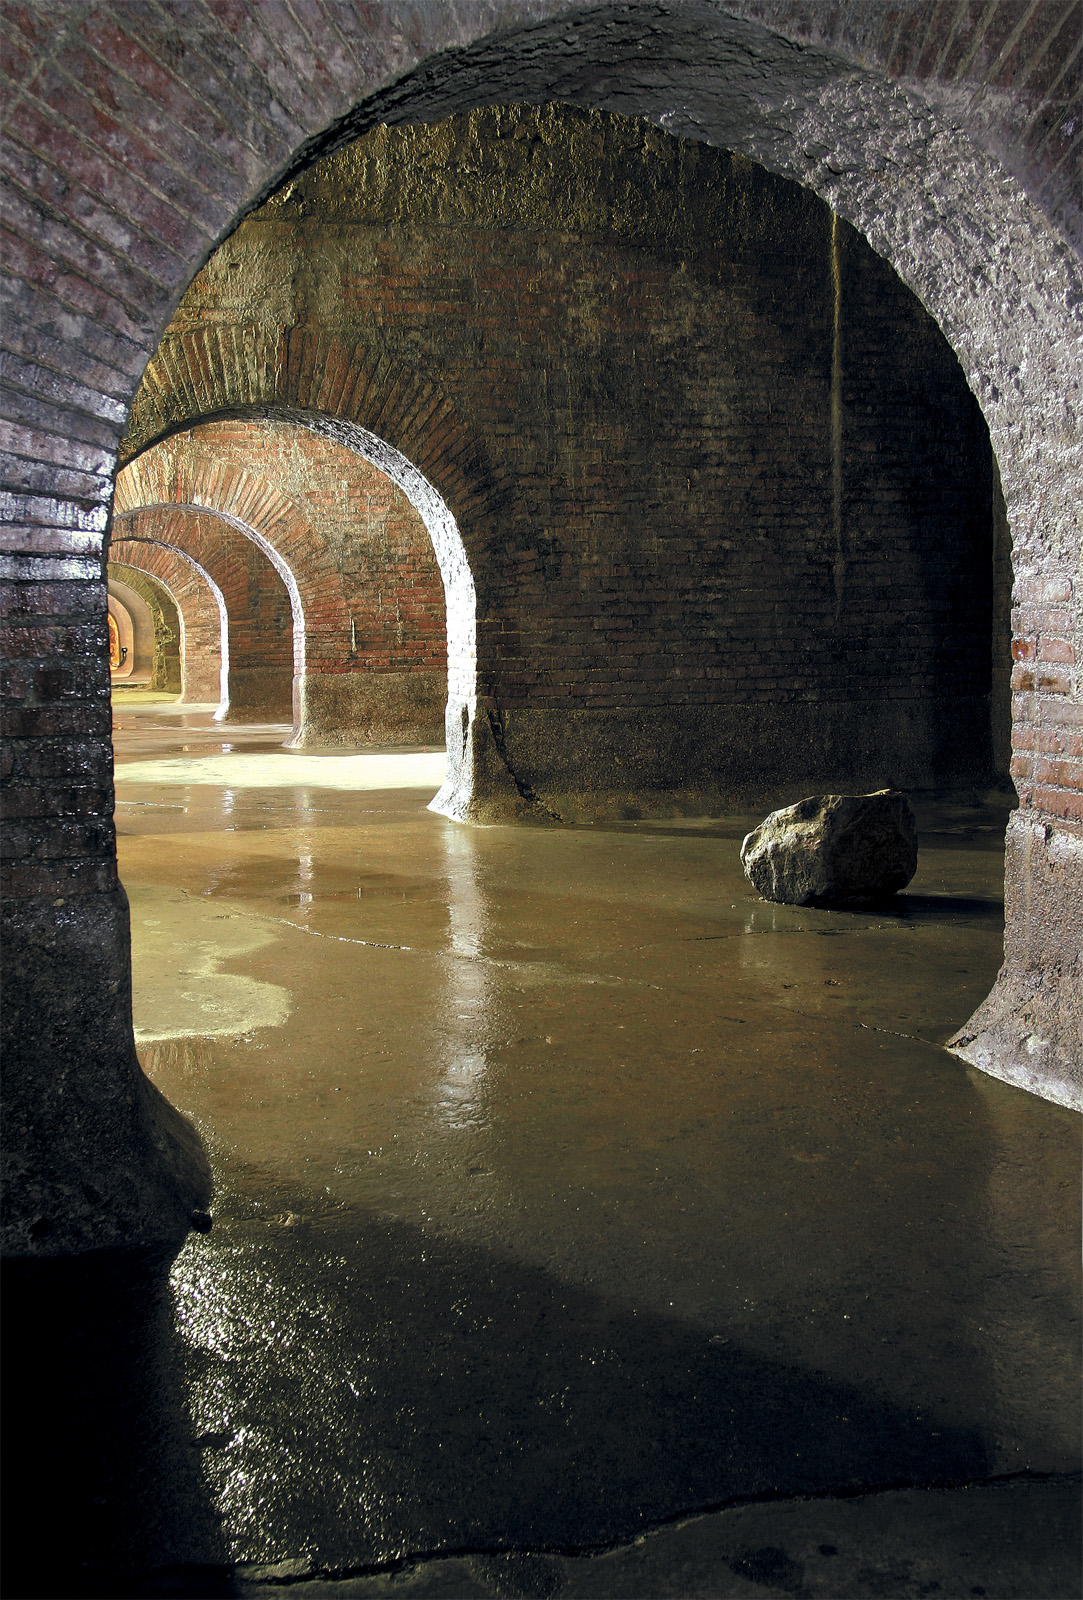 Cisterne romane